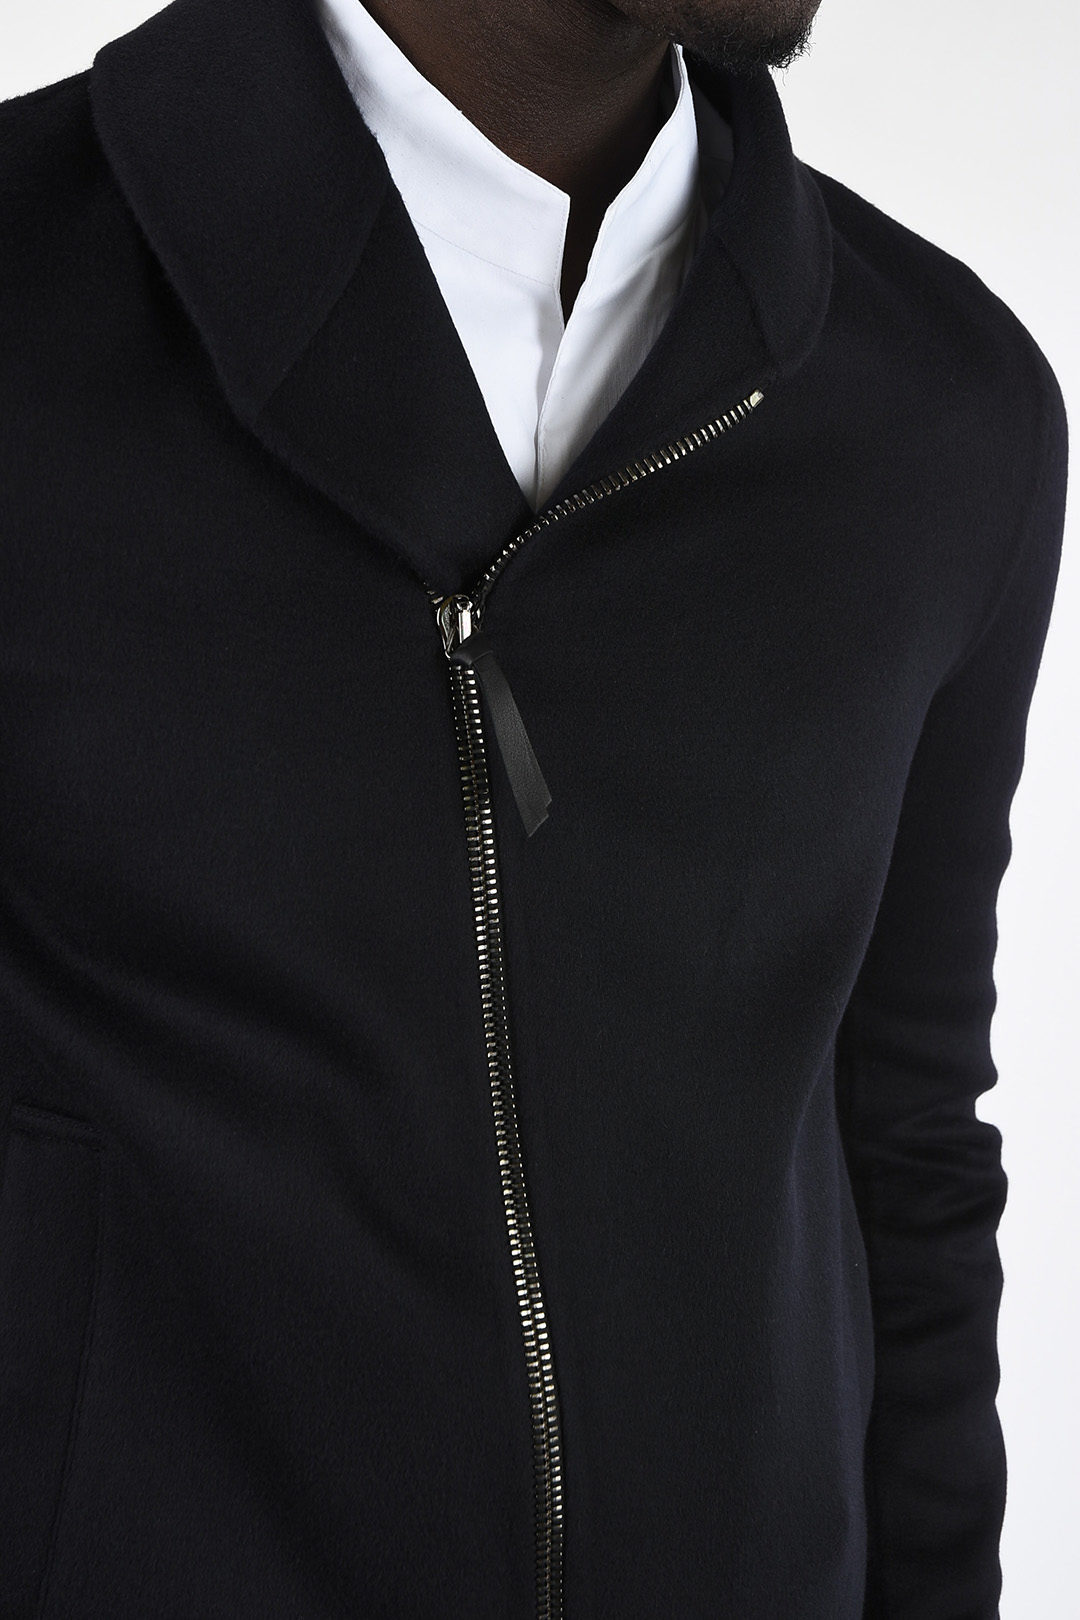 Armani GIORGIO ARMANI Cashmere Asymmetric Jacket men - Glamood Outlet